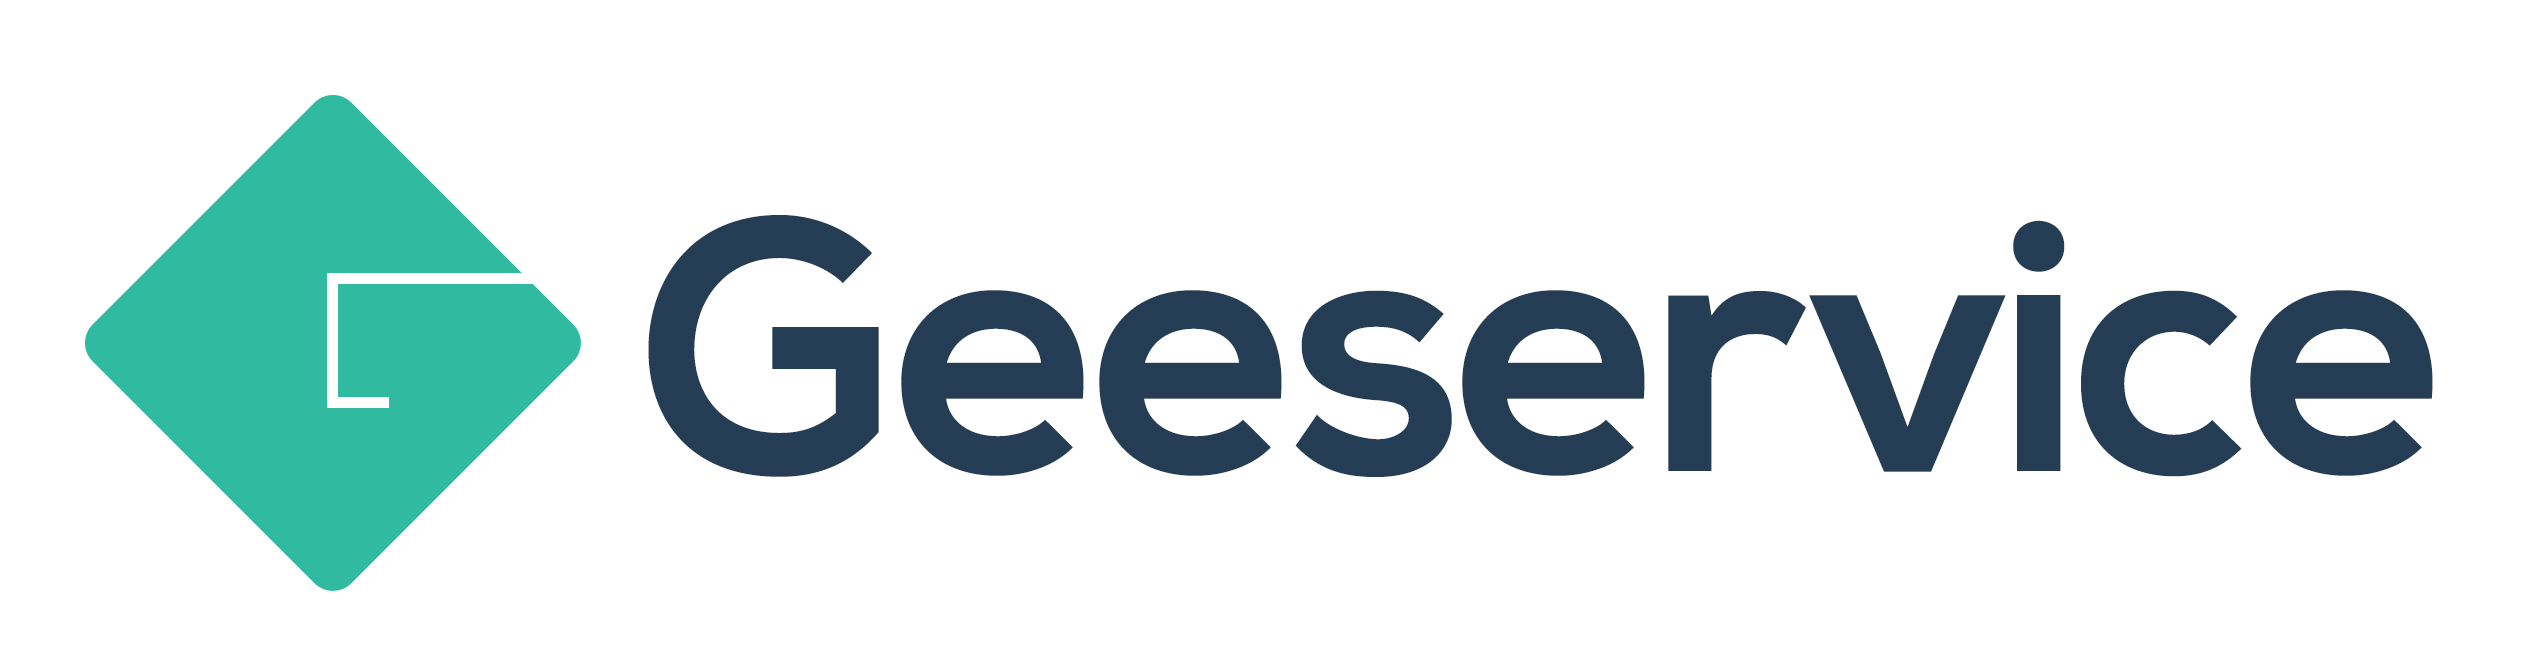 geeservice logo